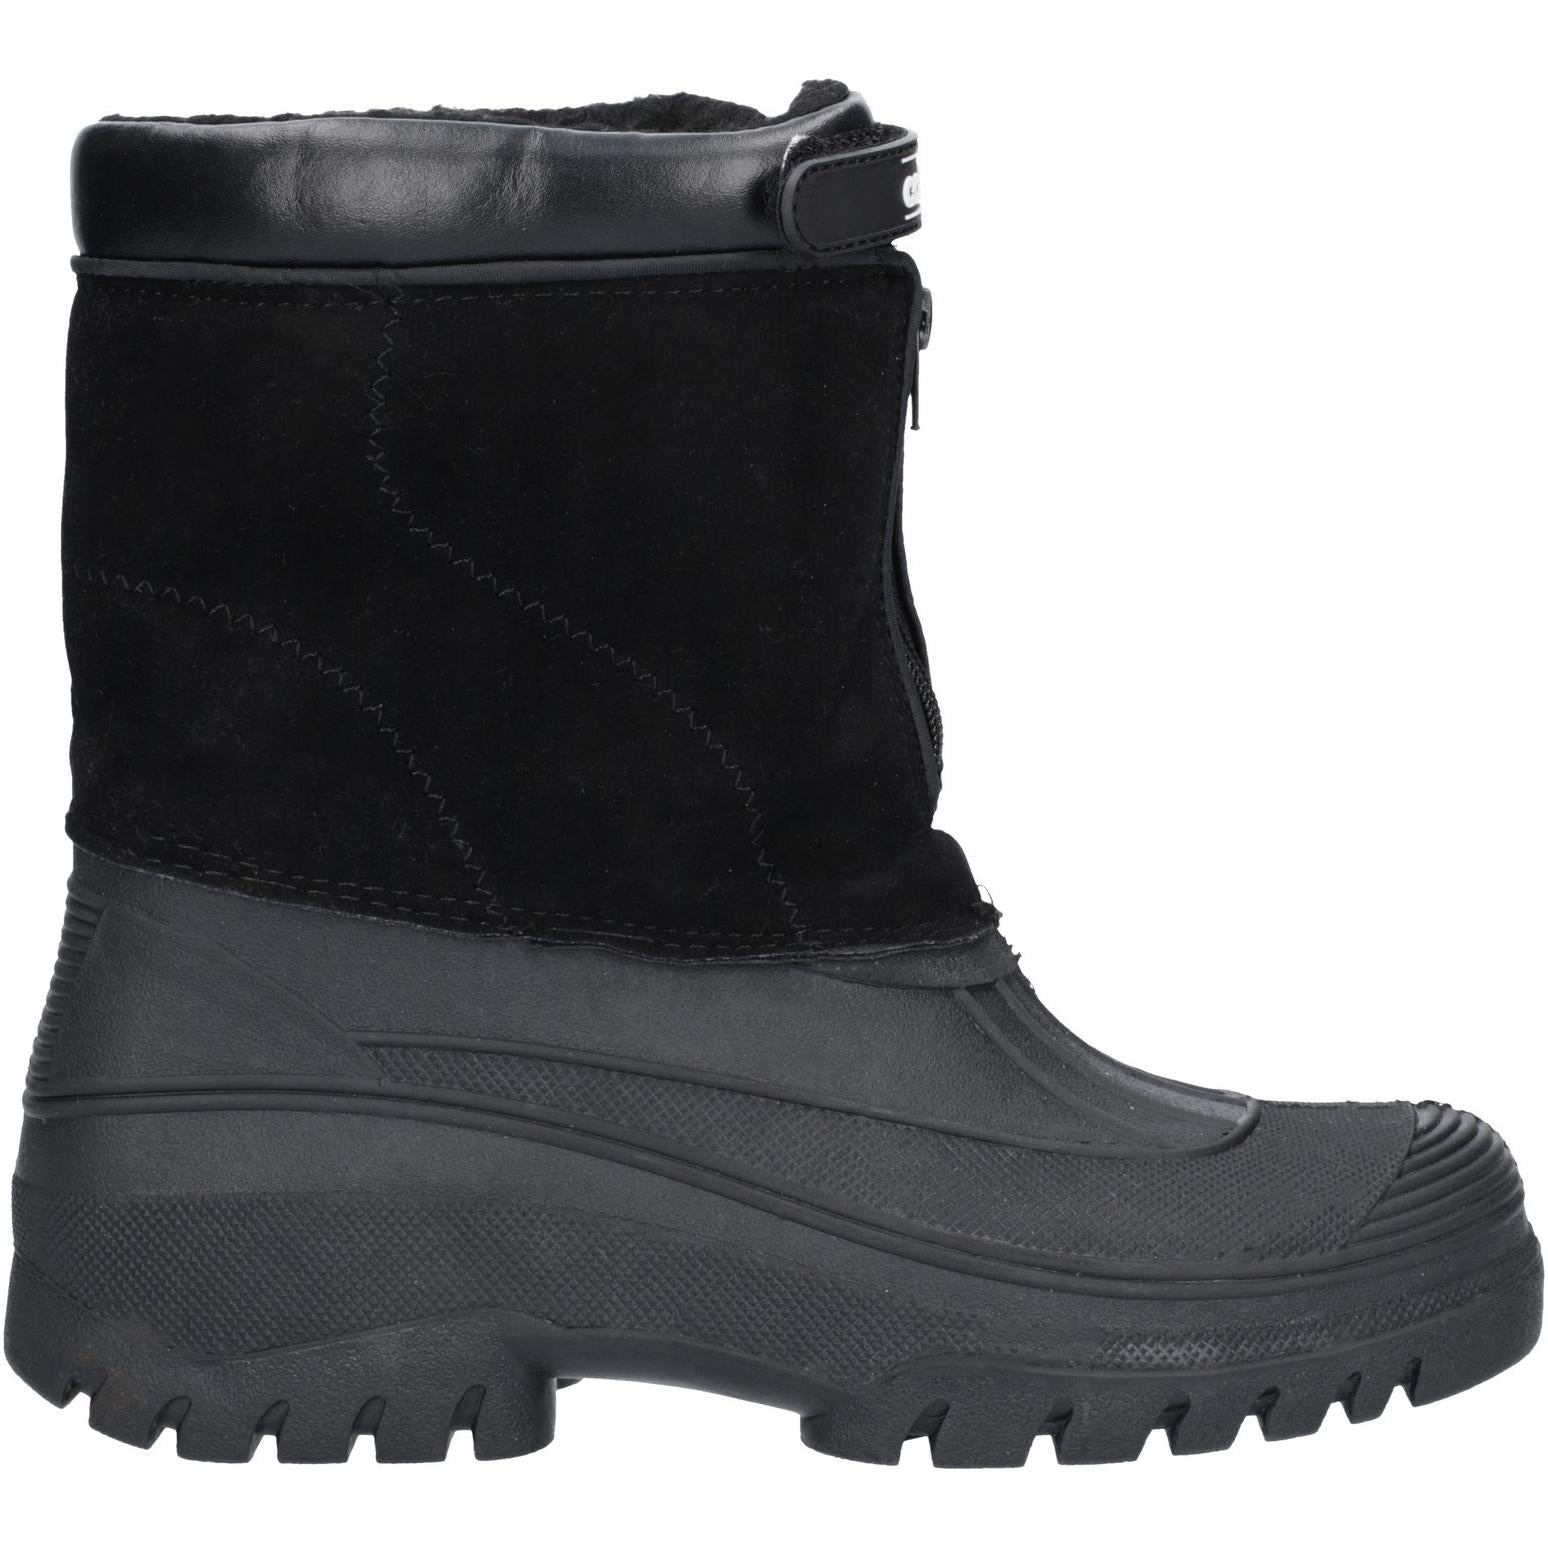 Miscellaneous Other Venture Waterproof Winter Boot